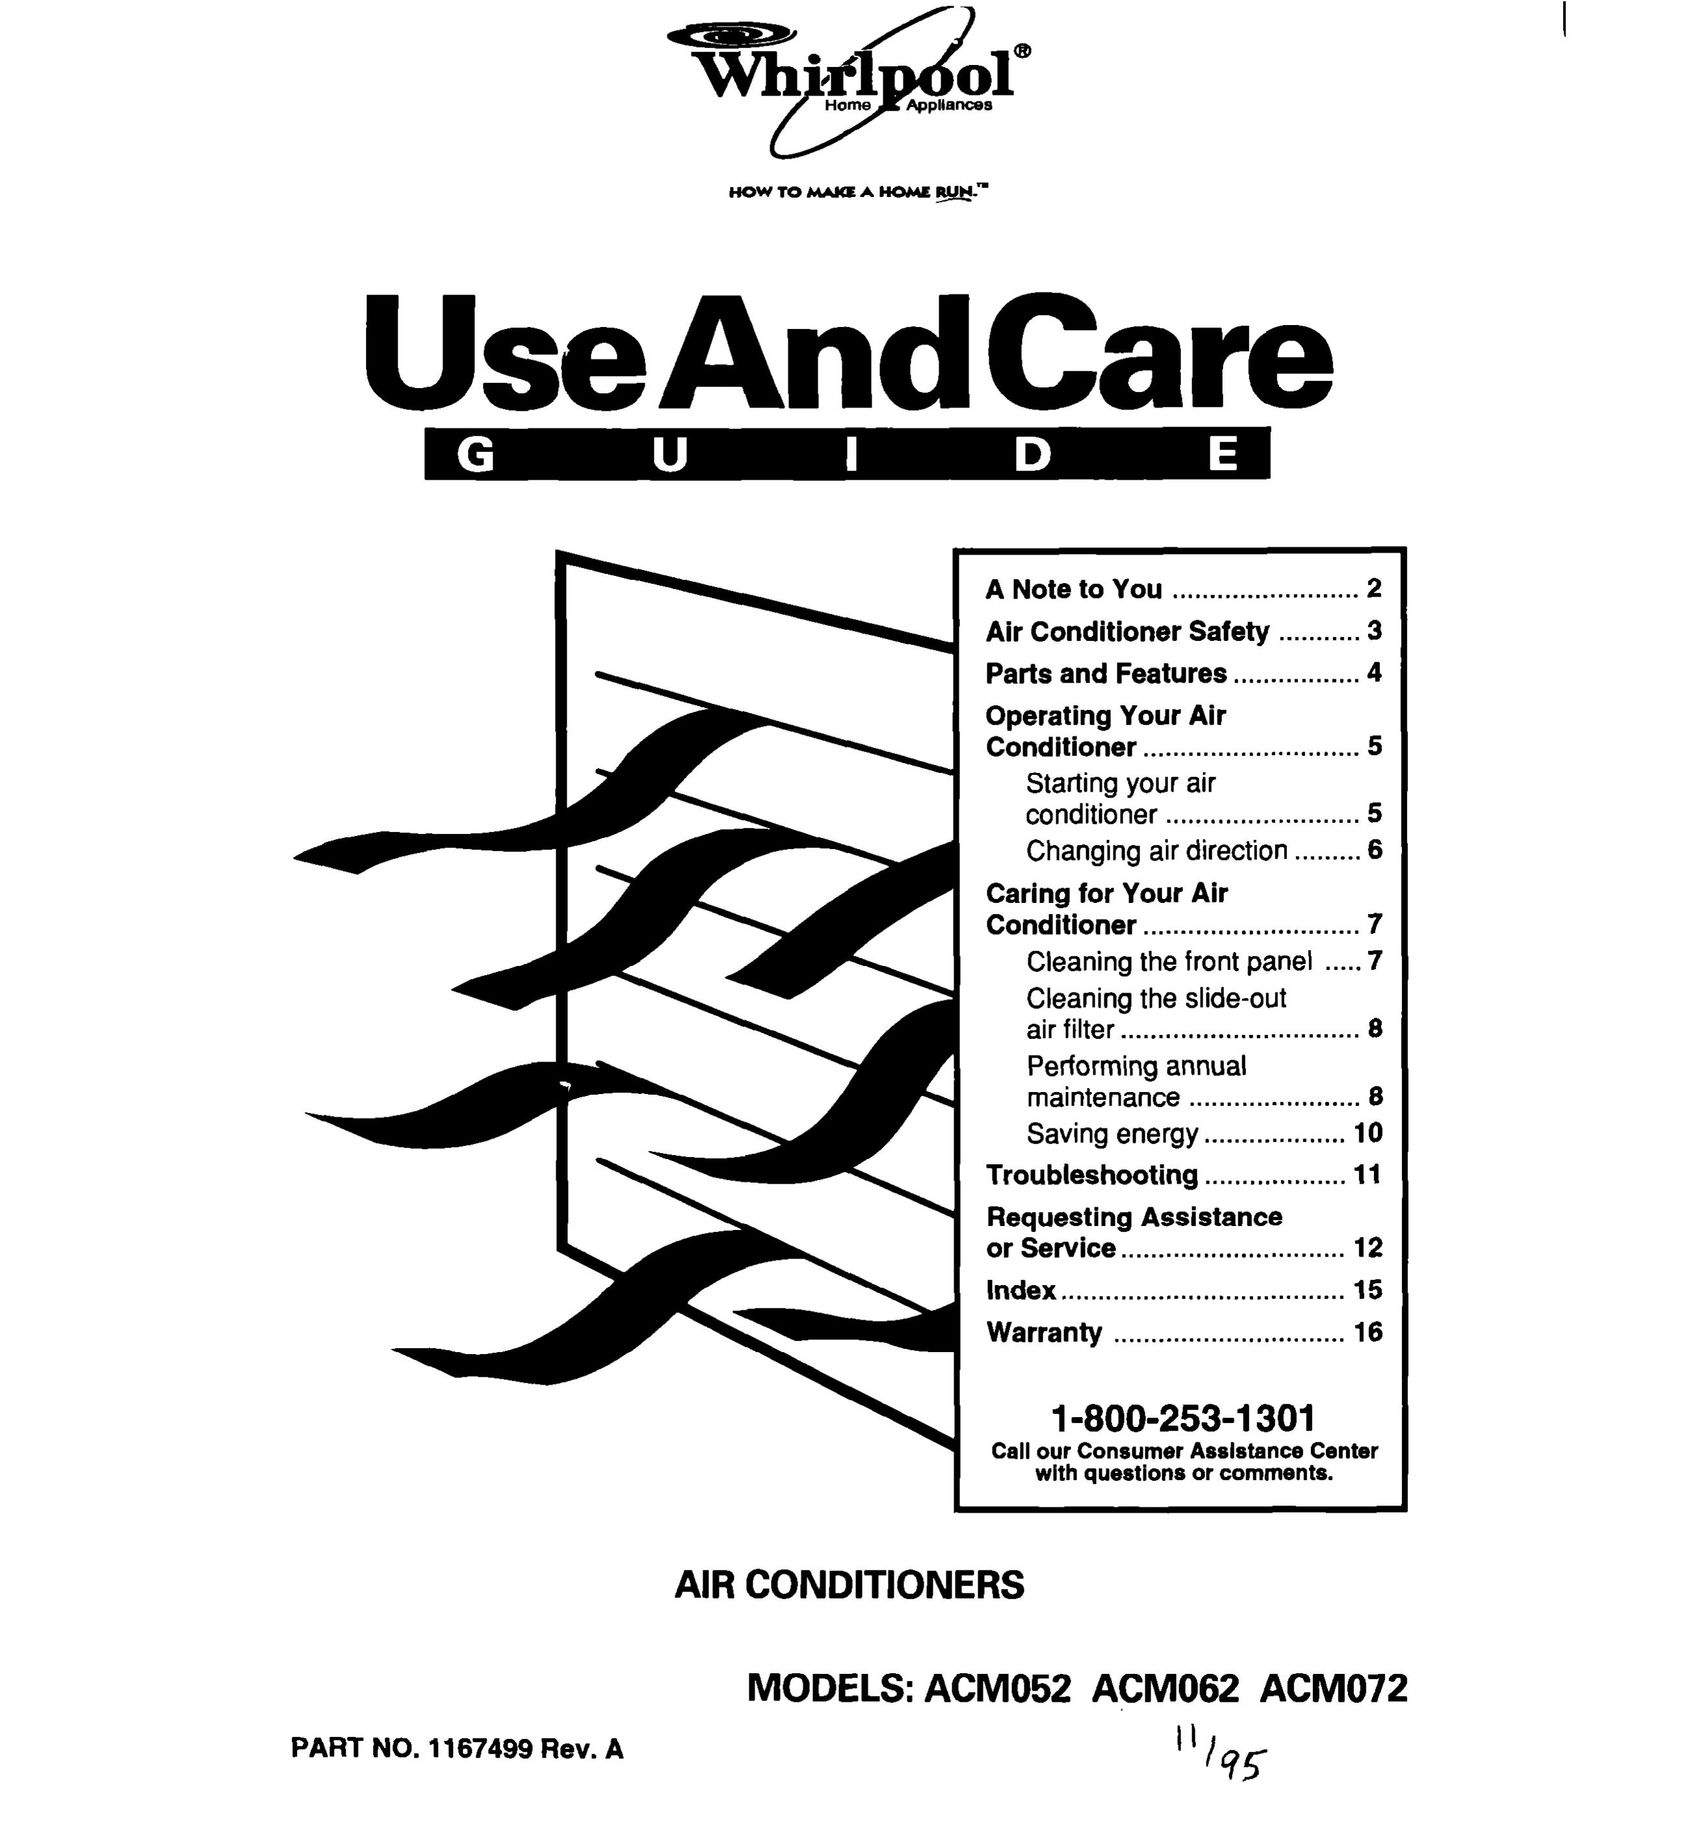 Whirlpool ACM052 Air Conditioner User Manual